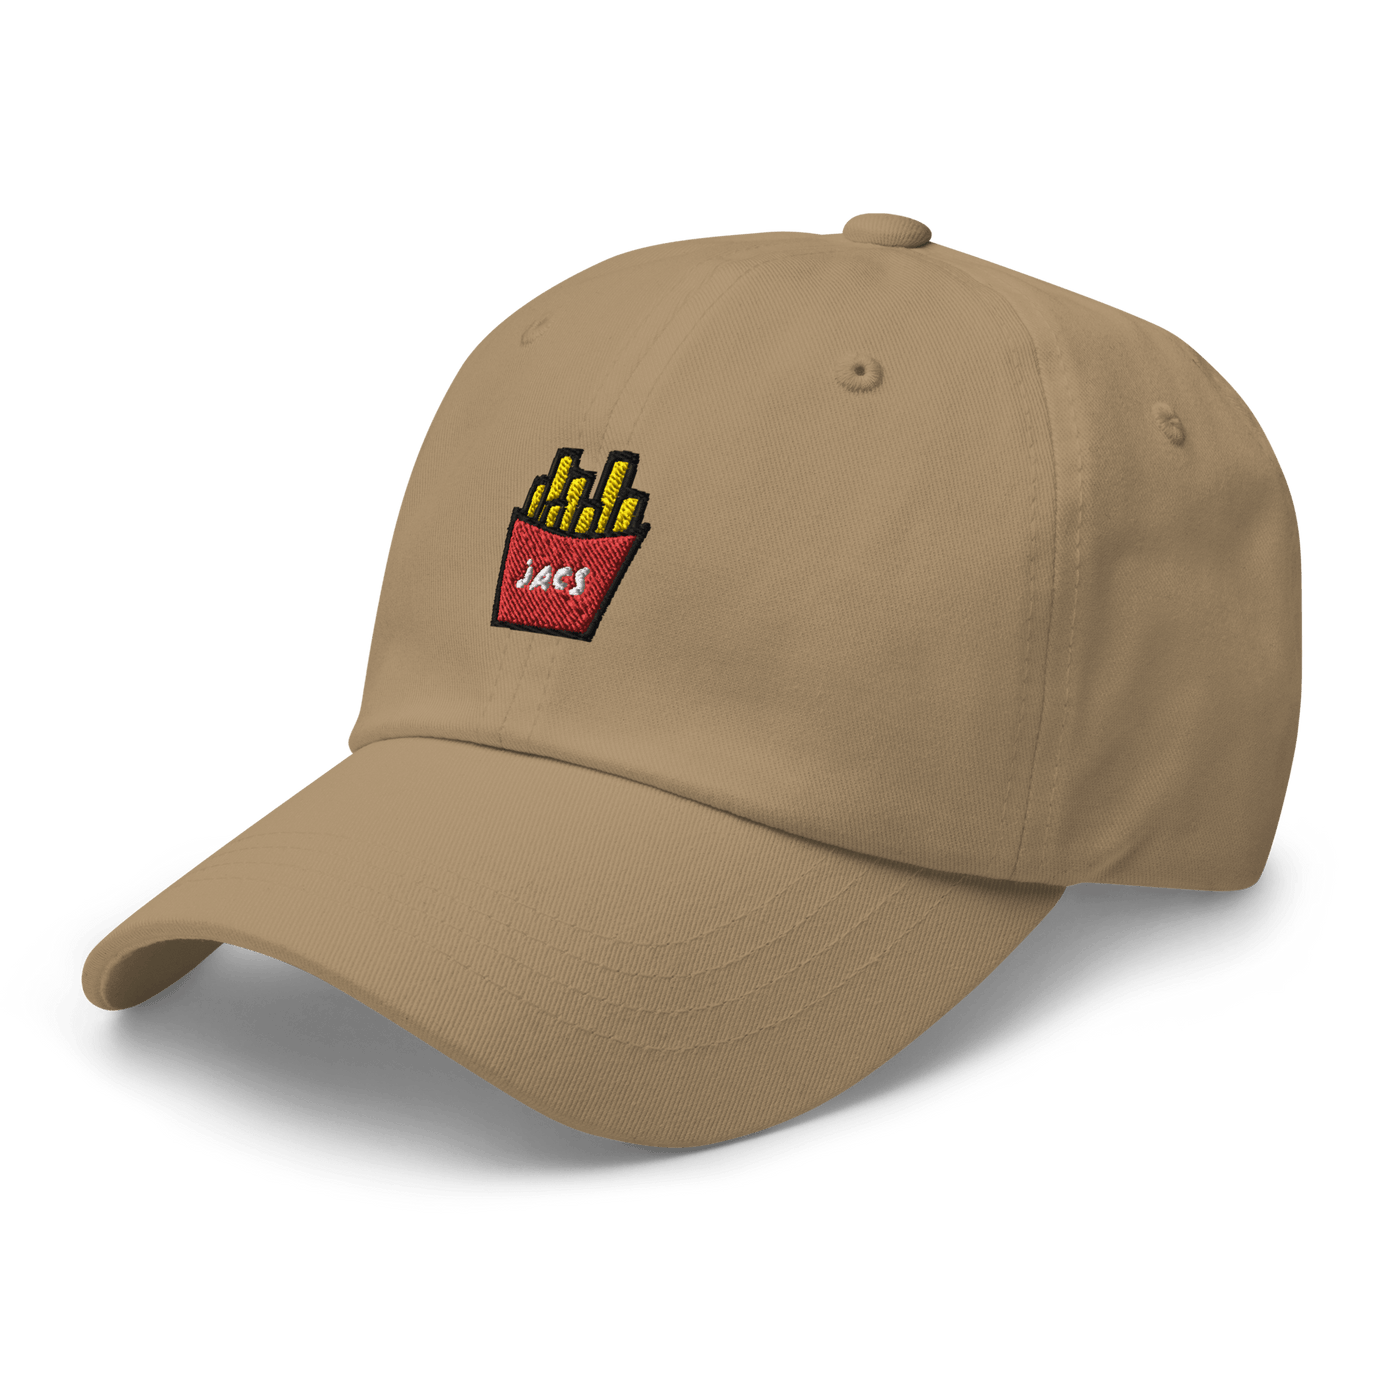 JACS Fries Dad hat - Khaki - - Just Another Cap Store